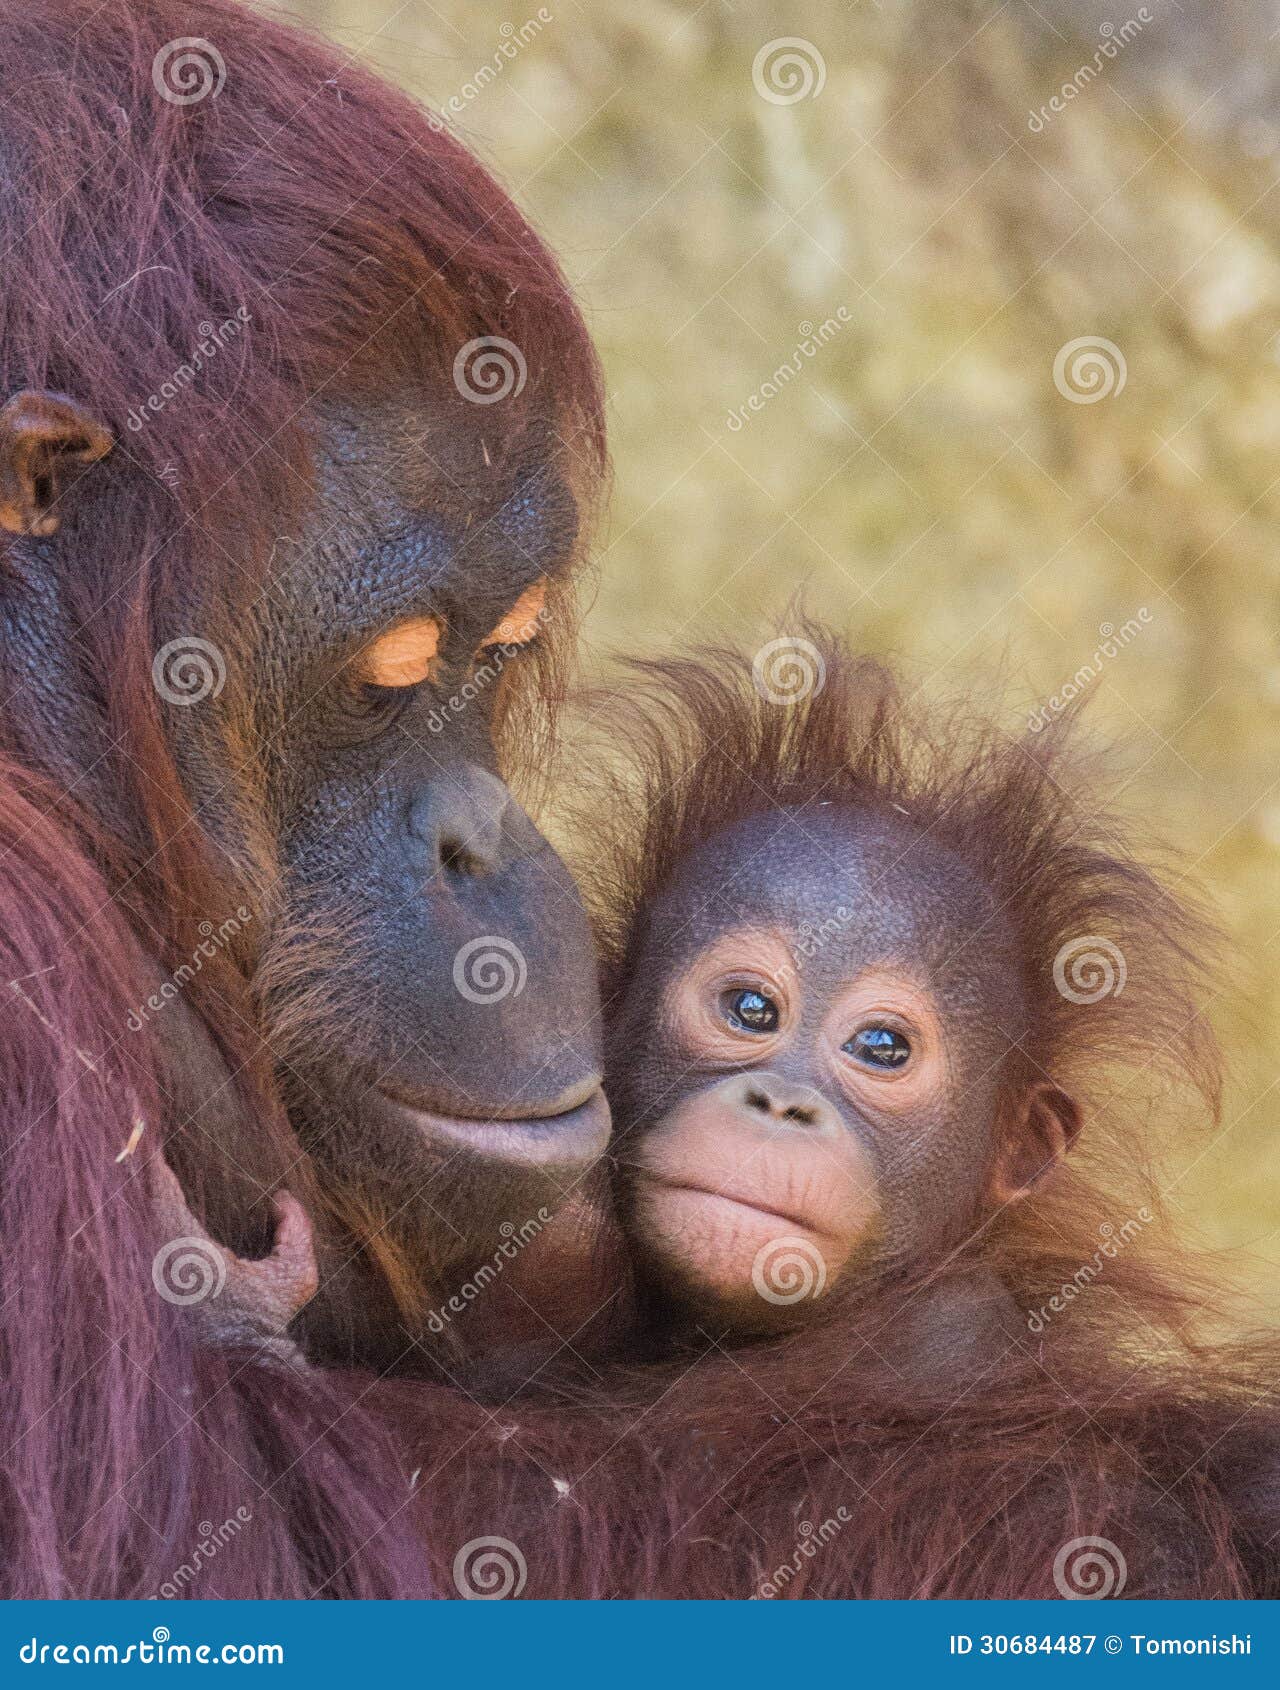 orangutan - mother and baby